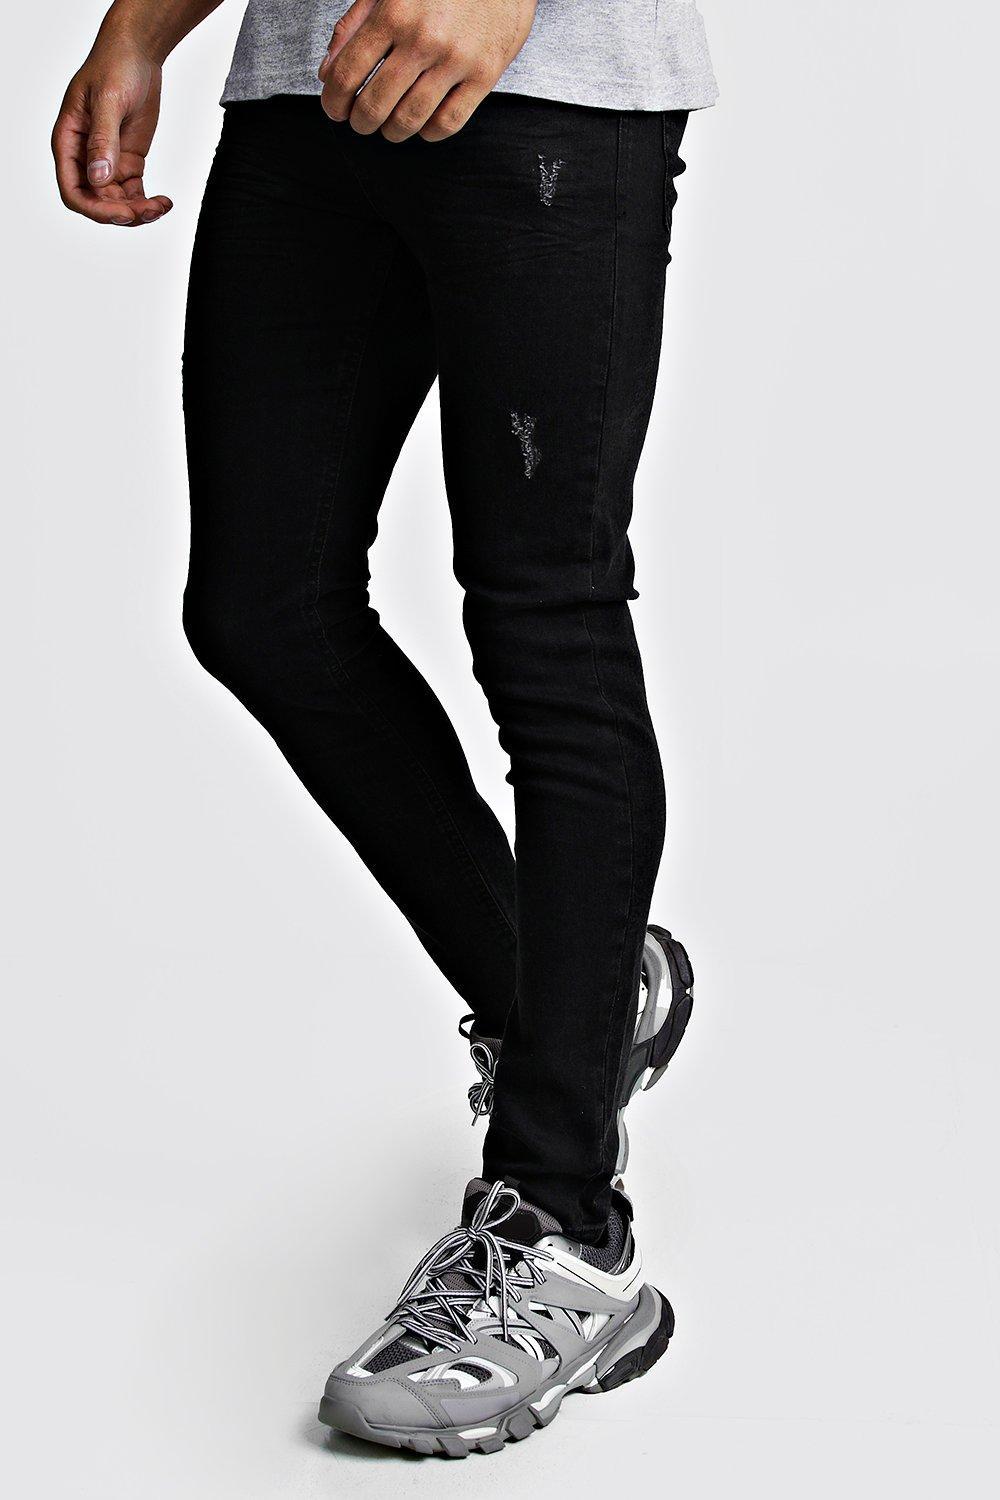 BoohooMAN Denim Jeans Super Skinny Aspect Vieilli in Washed Black ...